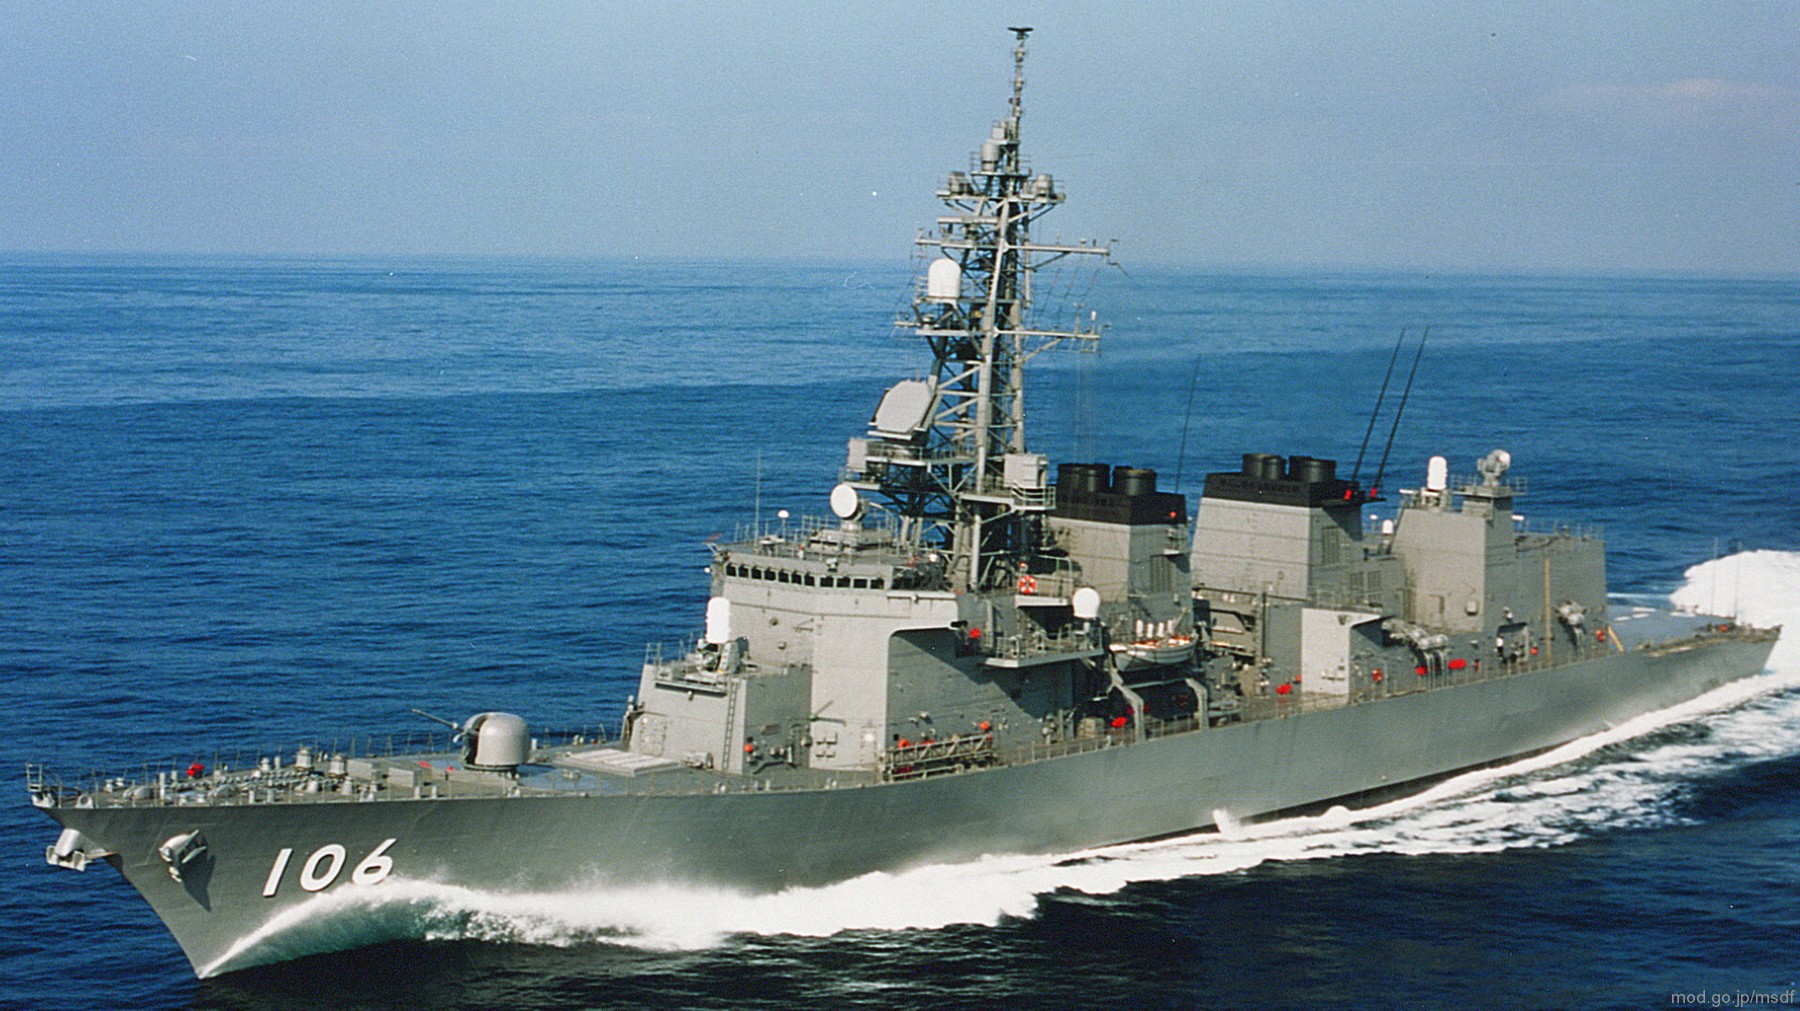 dd-106 js samidare murasame class destroyer japan maritime self defense force jmsdf 08